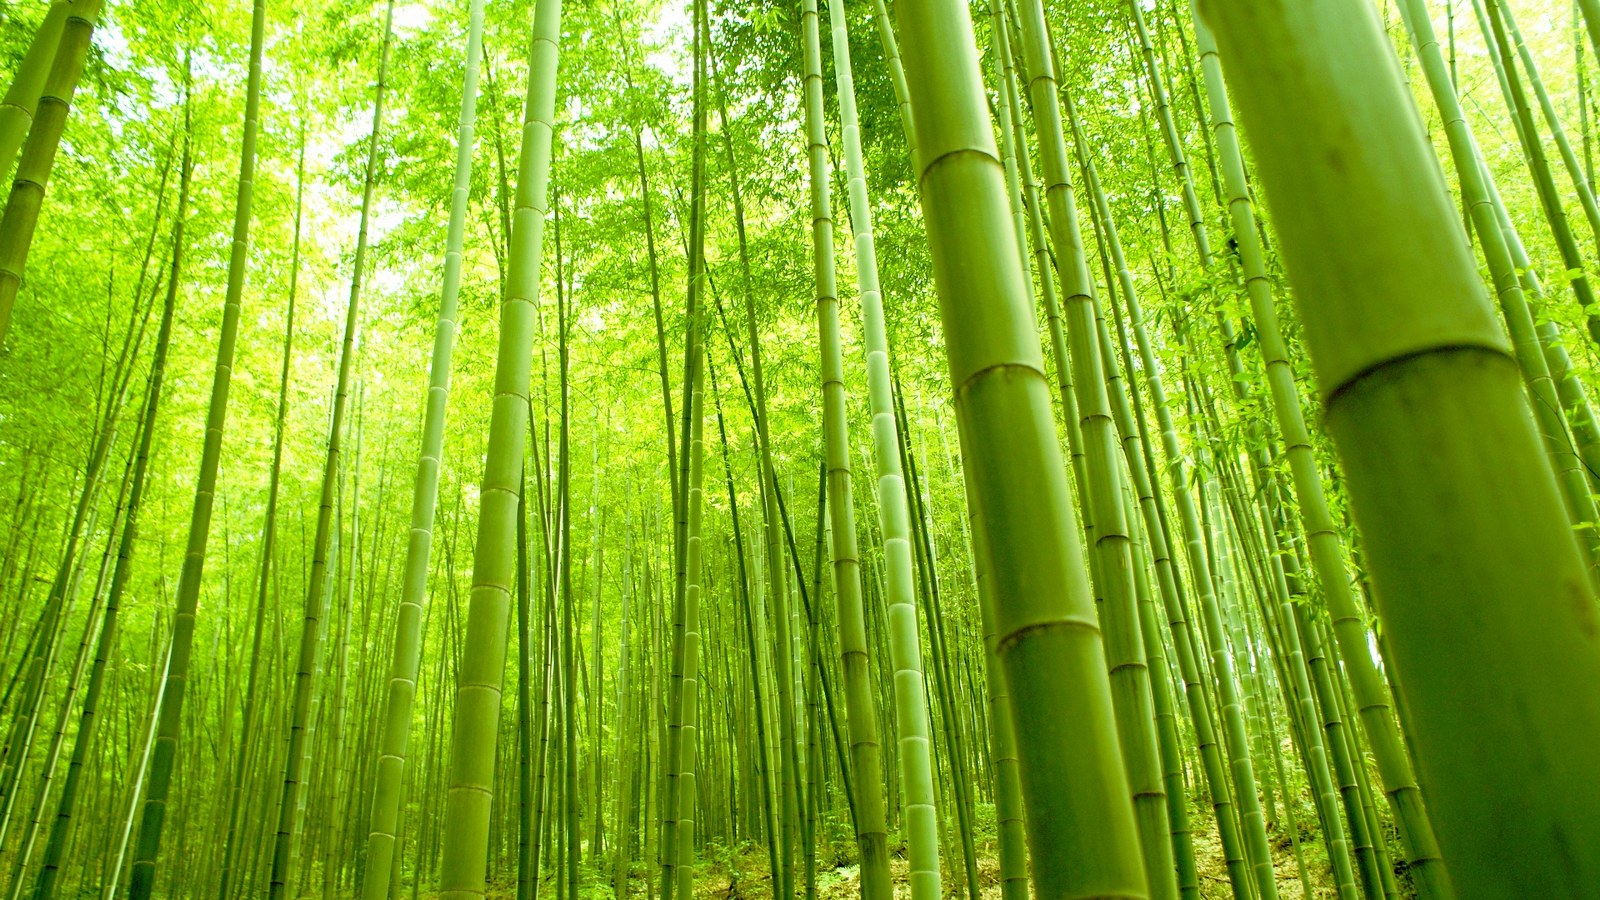 Green Bamboo In Forest Wallpaper55 Best Wallpaper For Pcs